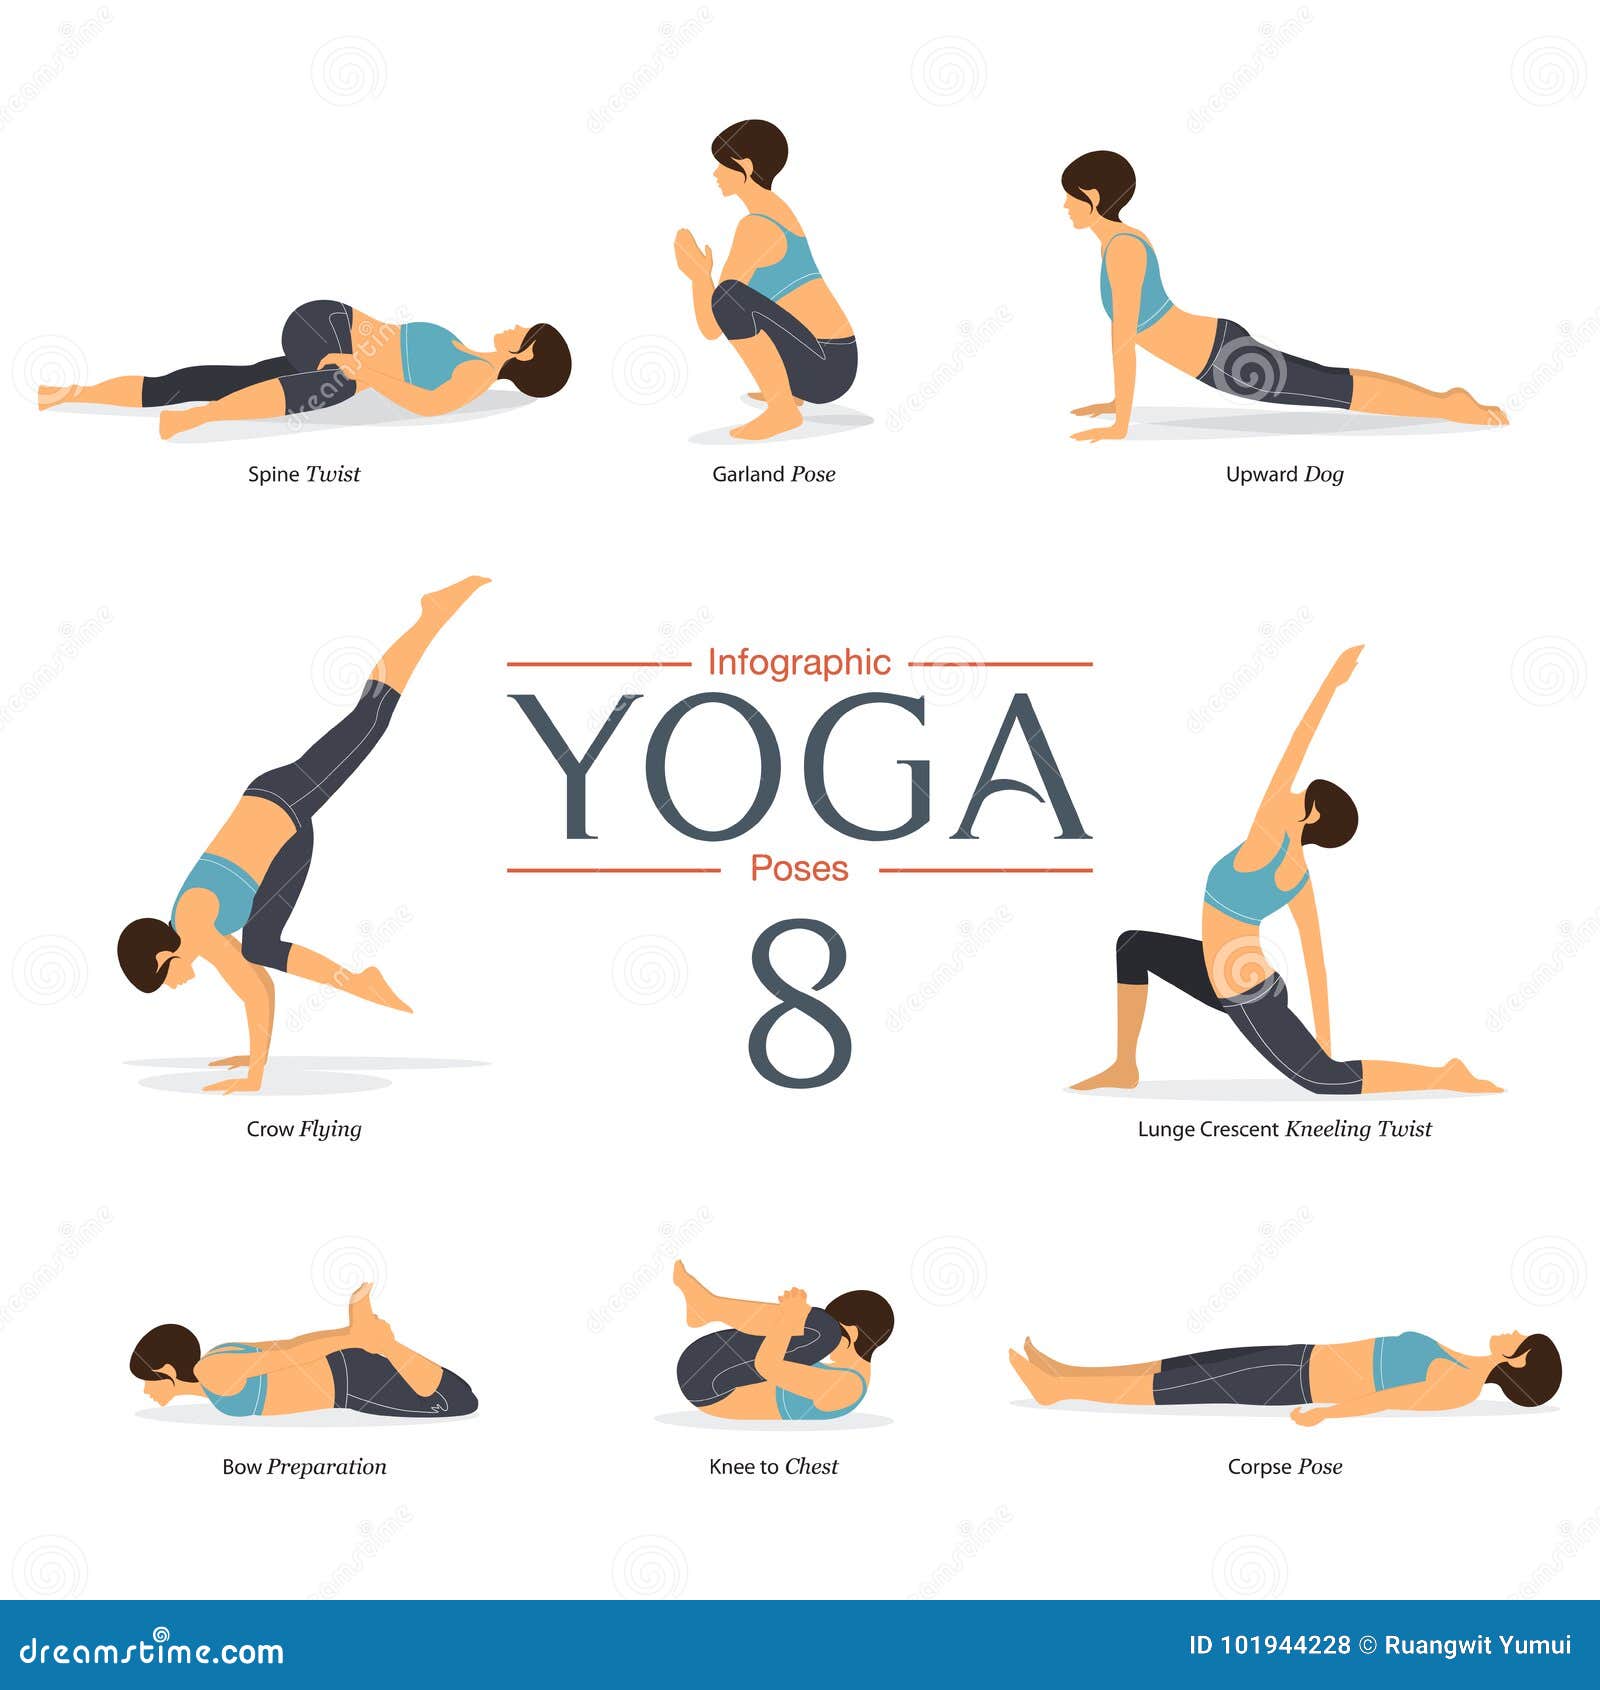 Yoga For Beginners - YouTube